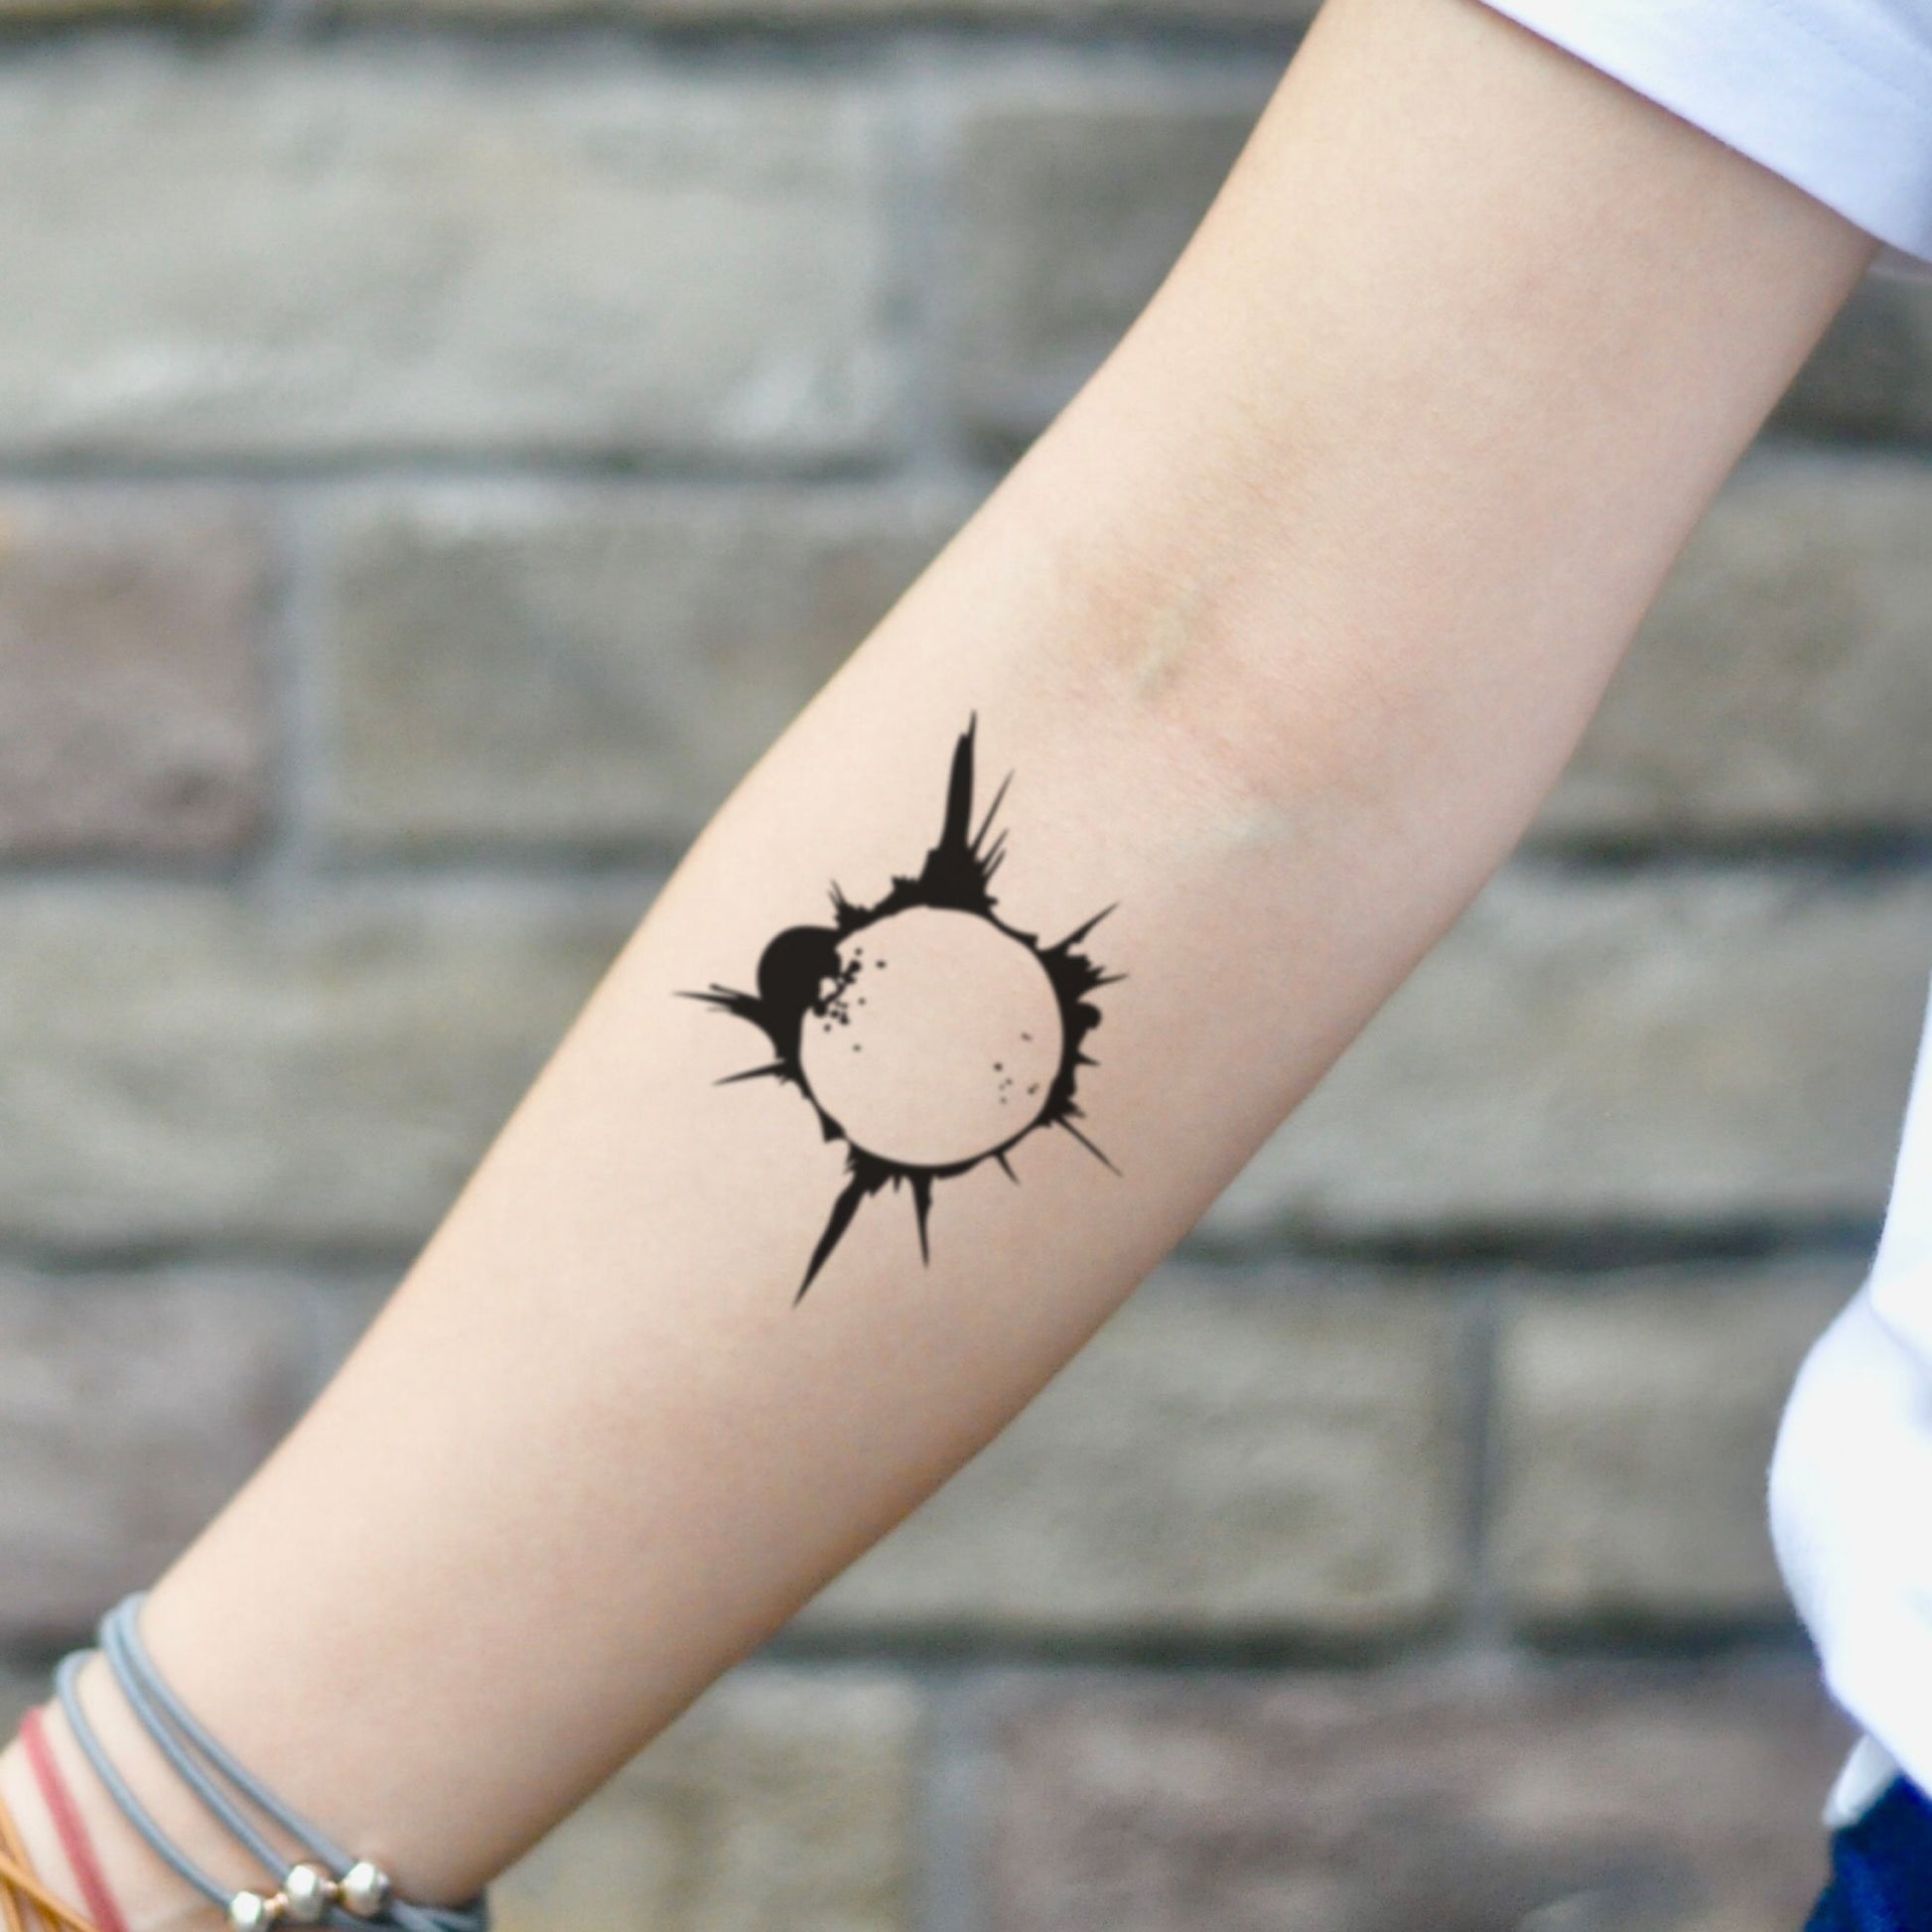 fake small solar eclipse lunar black hole minimalist simple circle geometric temporary tattoo sticker design idea on inner arm